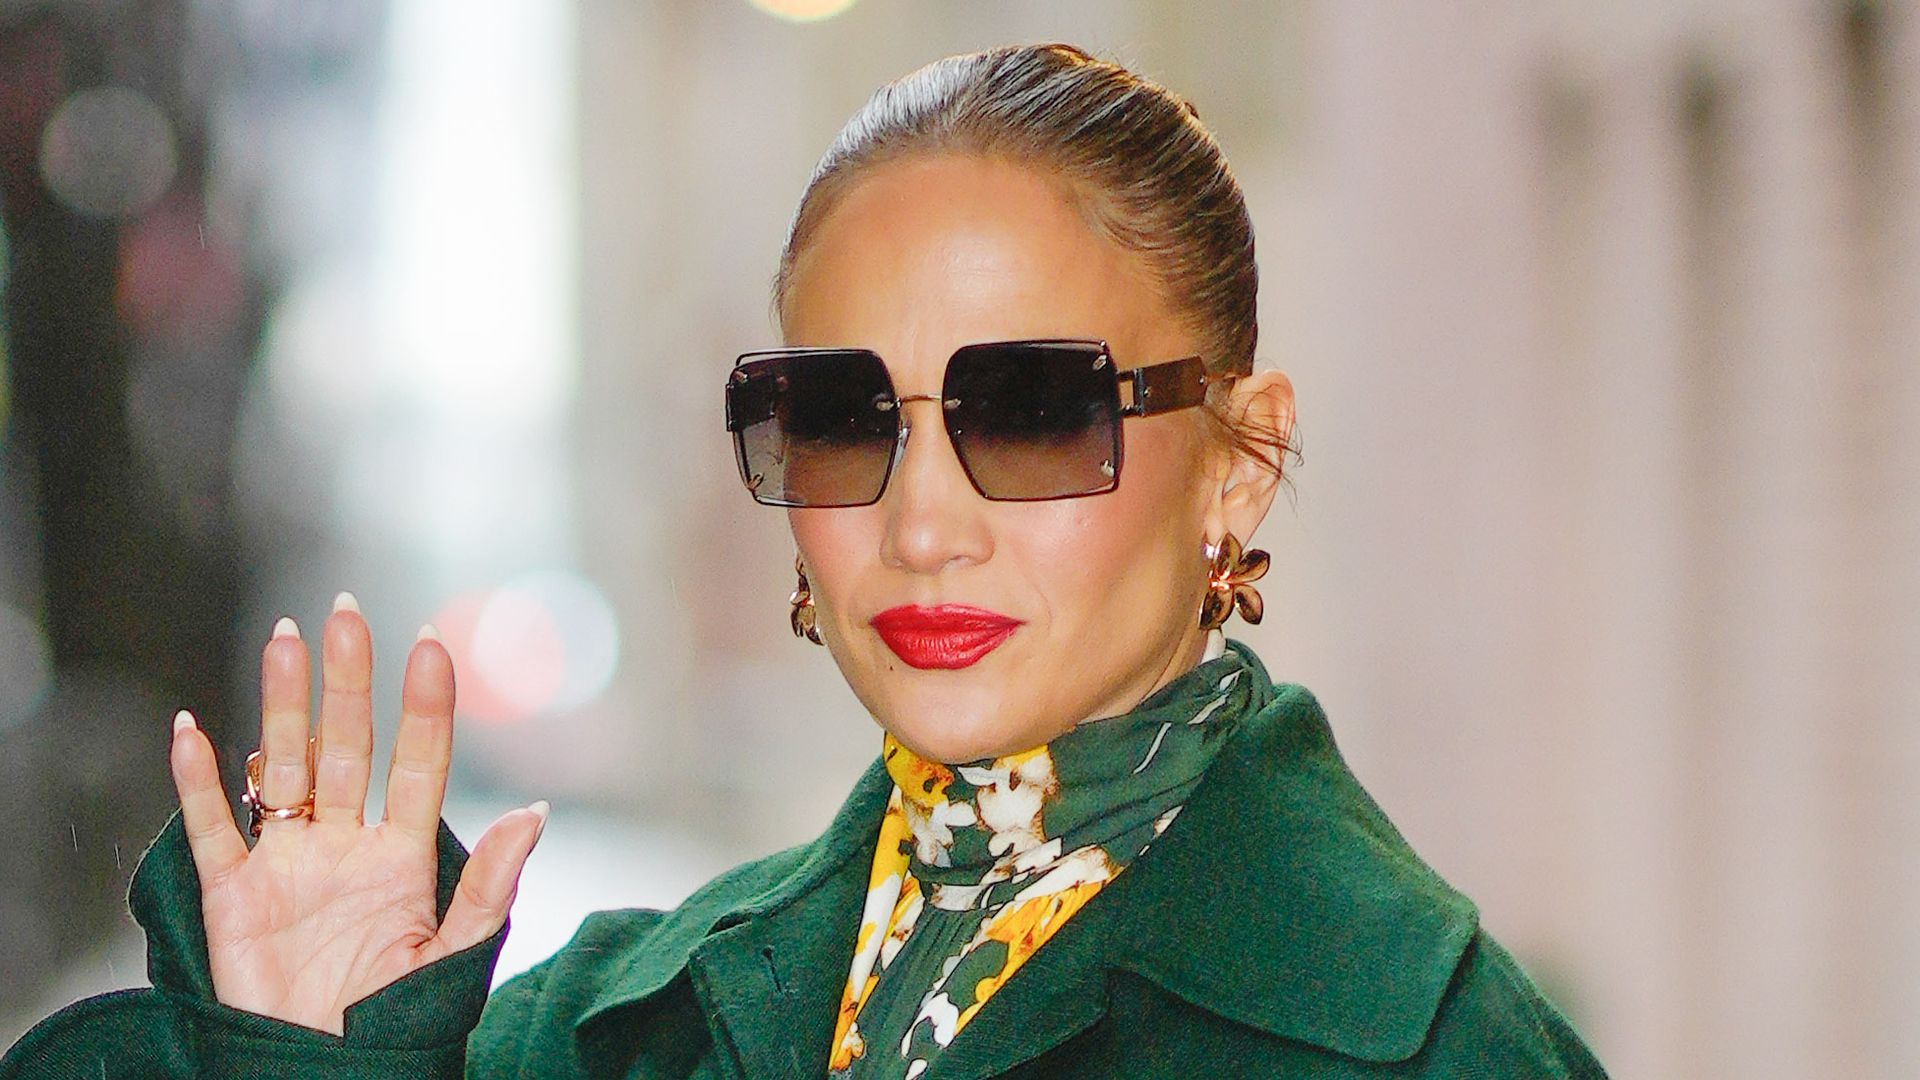 NEW YORK, NEW YORK - FEBRUARY 04: Jennifer Lopez exits ABC Studios on February 04, 2022 in New York City. (Photo by Gotham/GC Images)